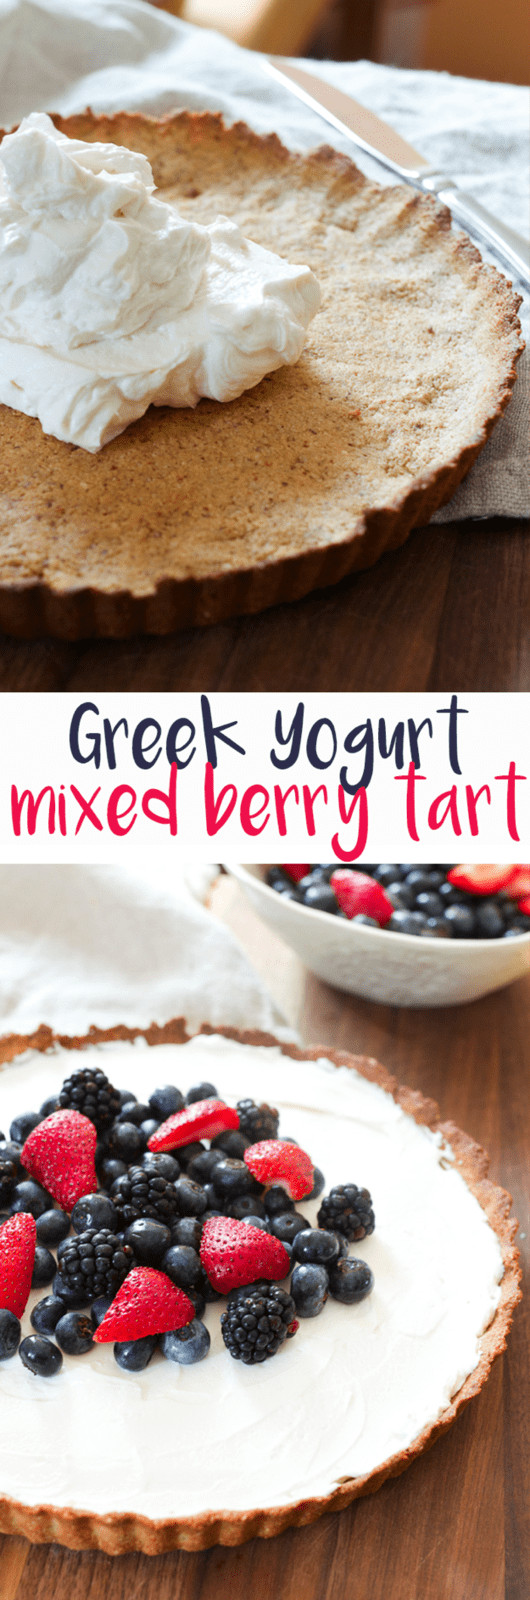 Healthy Greek Desserts
 Healthy Greek Yogurt Berry Tart